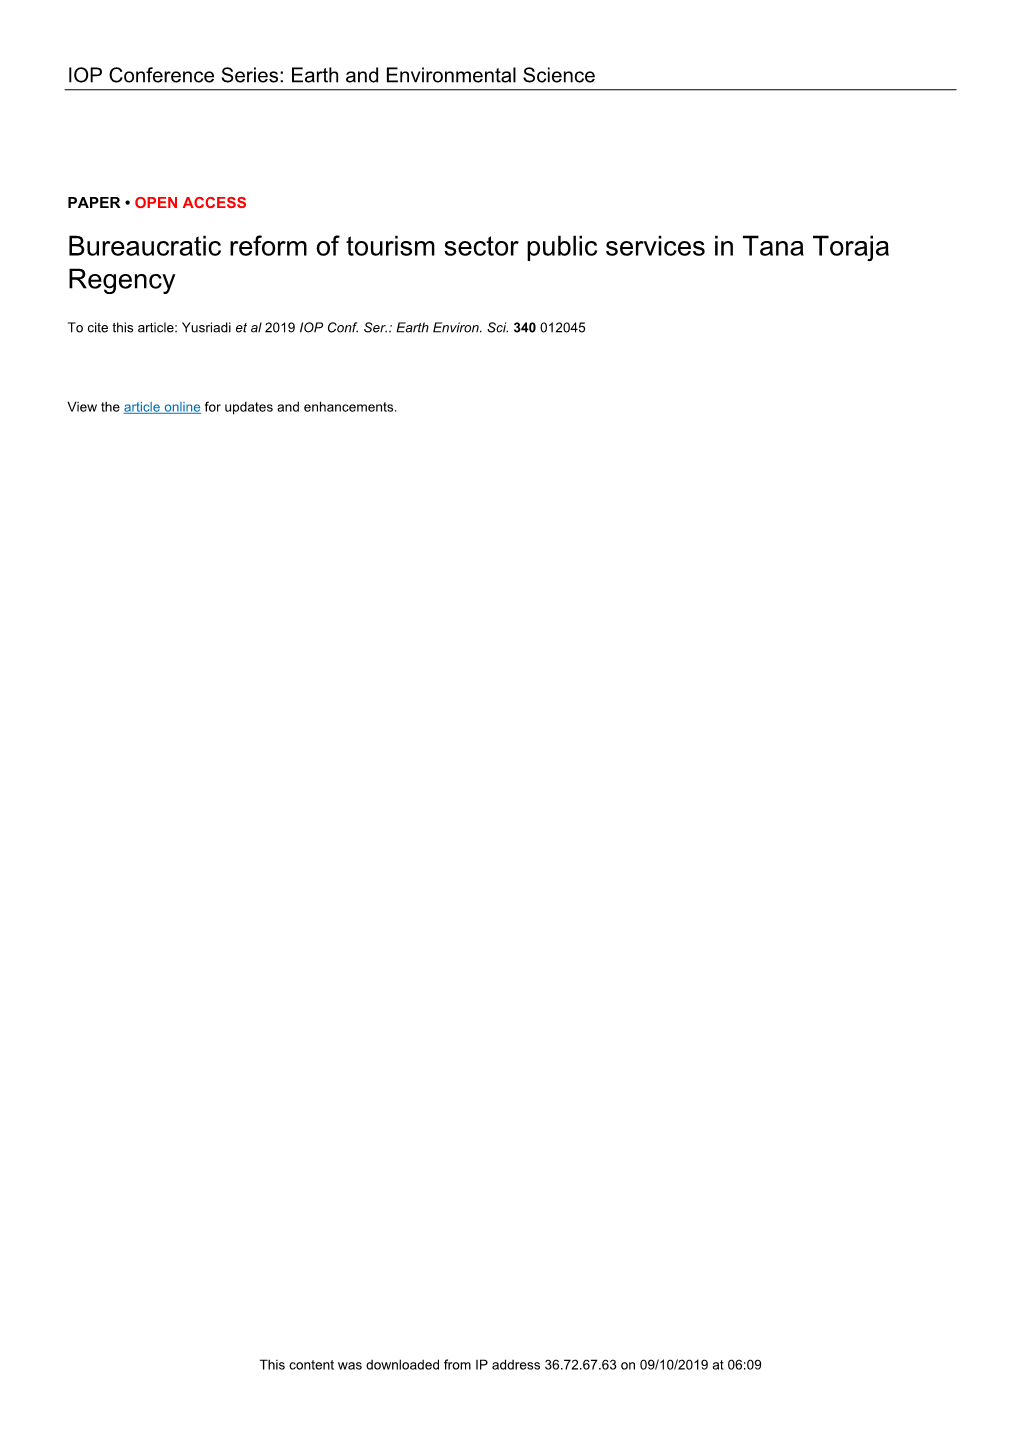 Bureaucratic Reform of Tourism Sector Public Services in Tana Toraja Regency